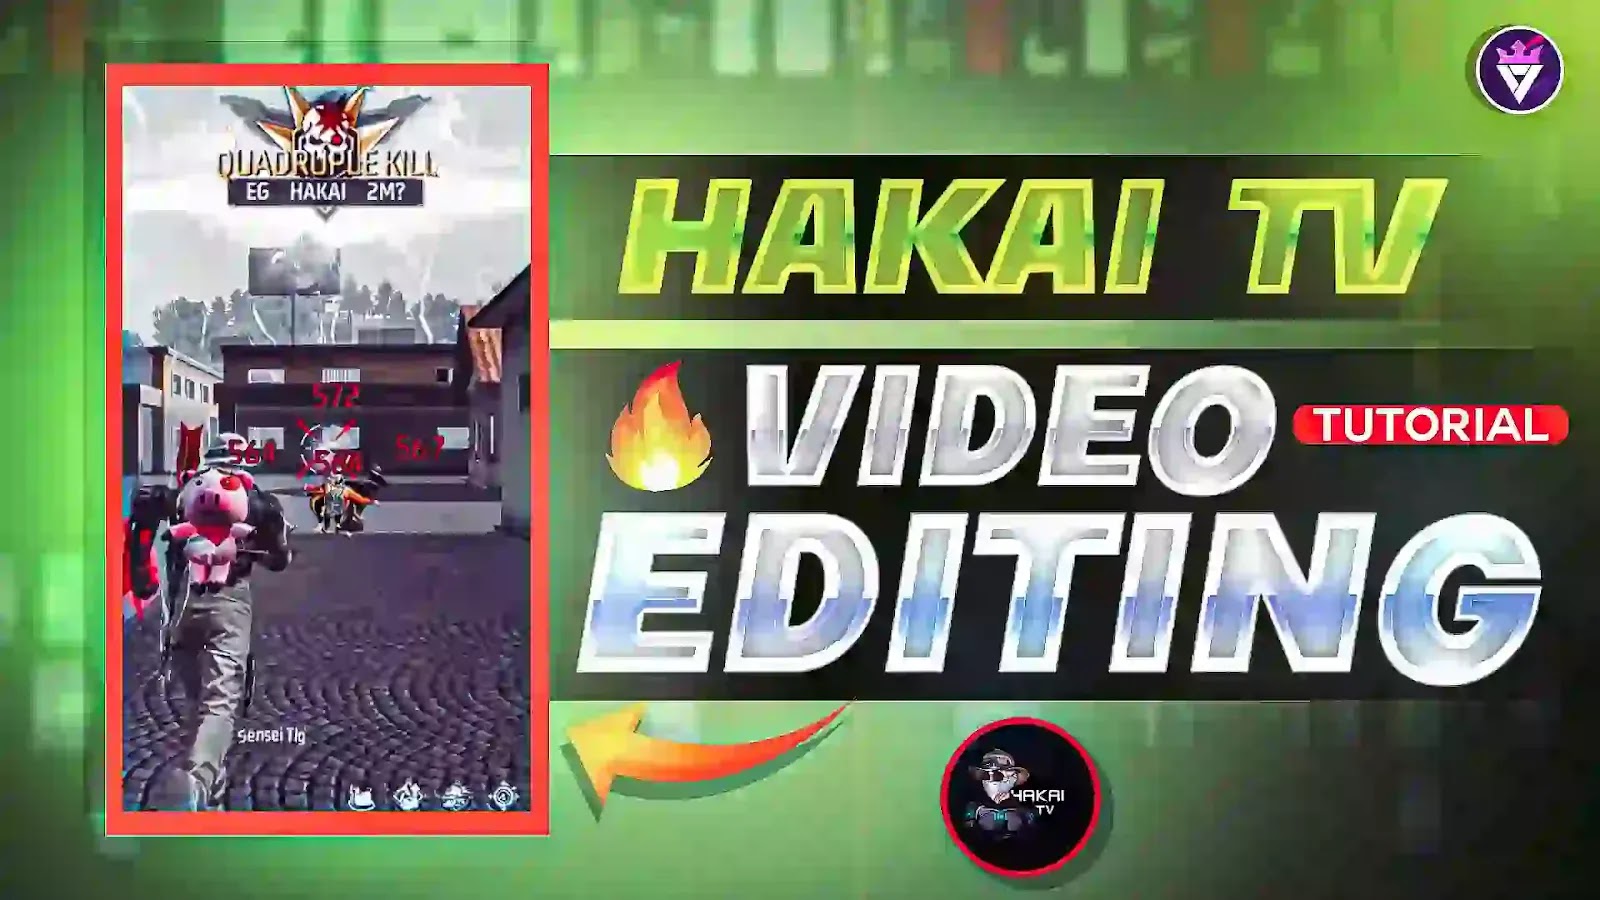 Hakai Tv Viral 1 Shot 4 Kill Video Editing Pack & Tutorials